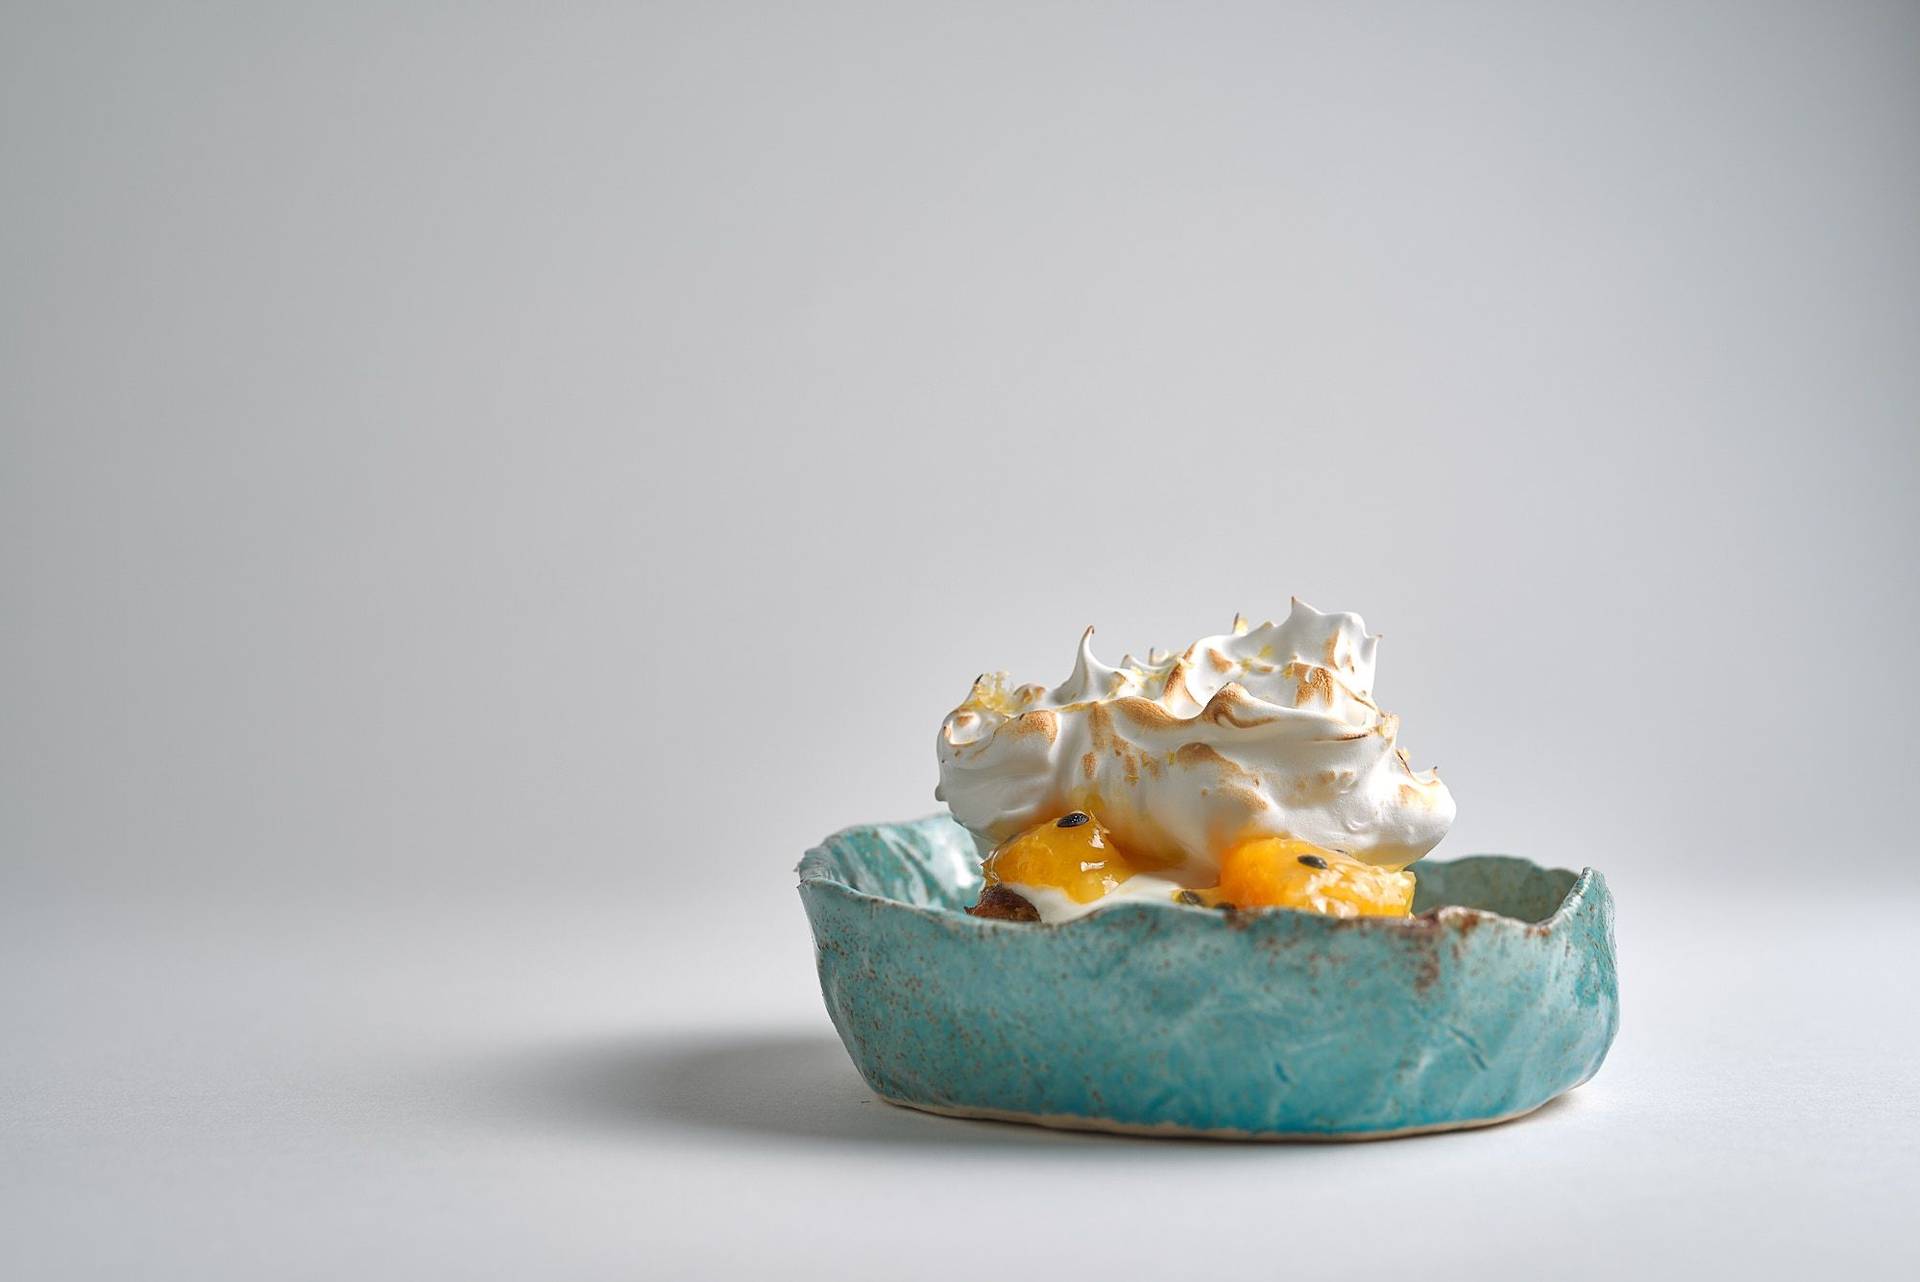 passionfruit meringue dessert in a blue ceramic bowl on white background